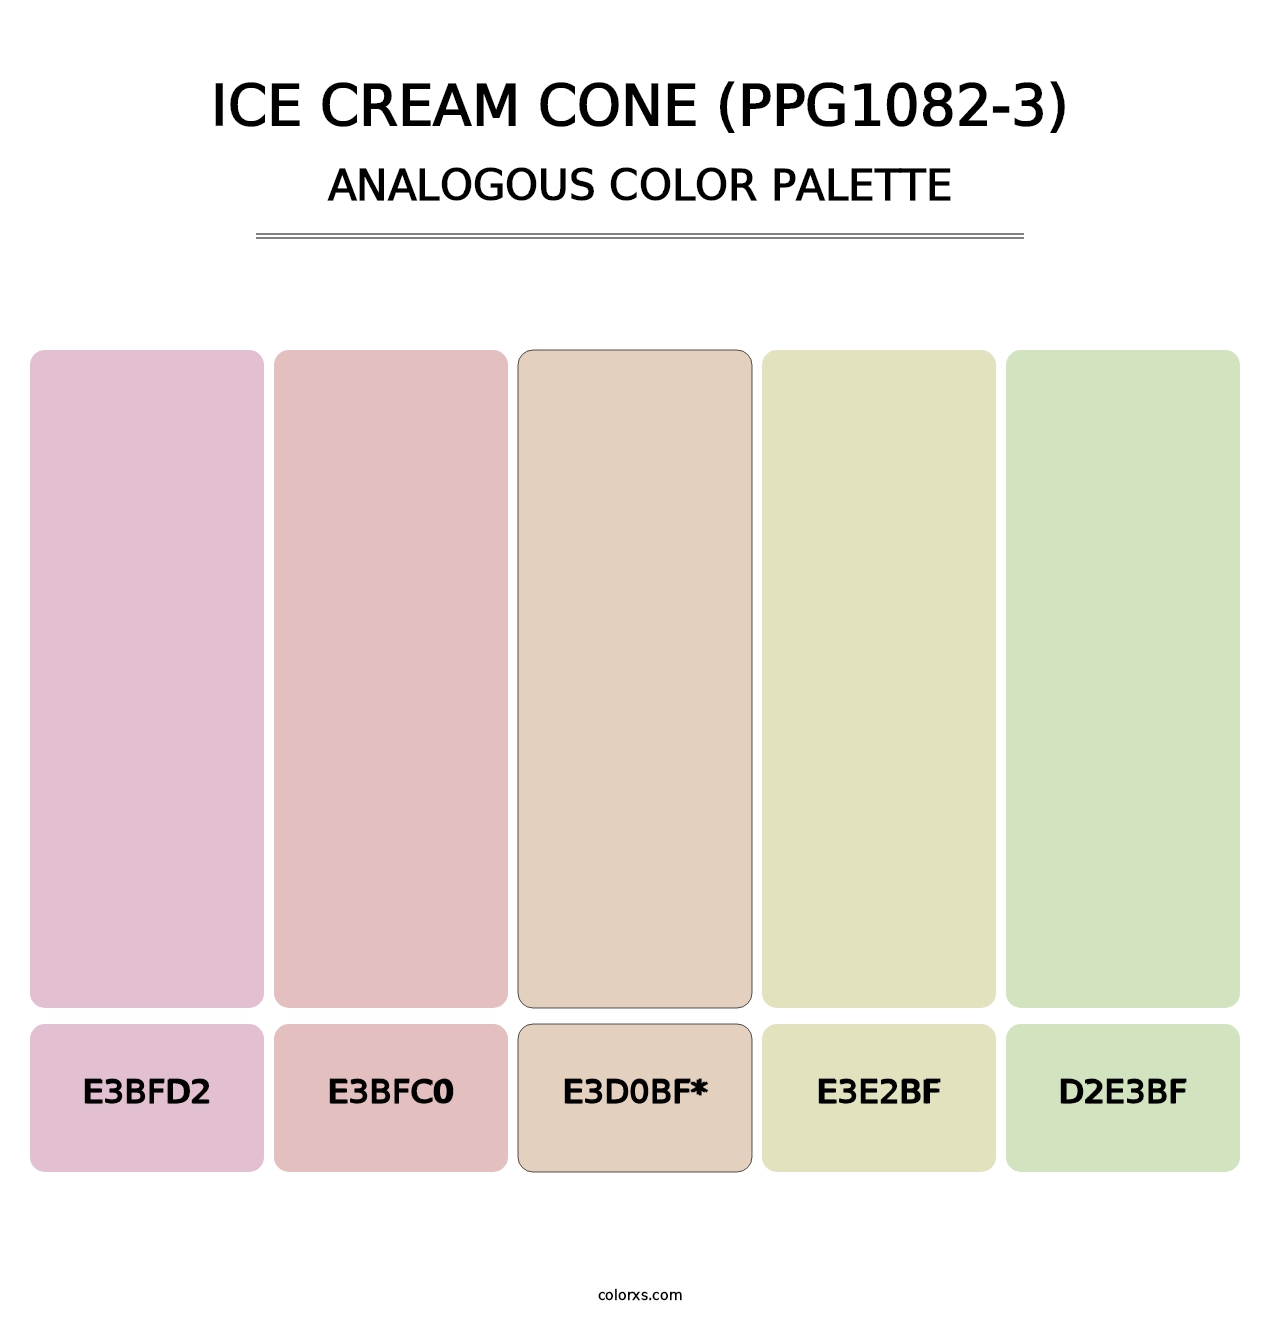 Ice Cream Cone (PPG1082-3) - Analogous Color Palette